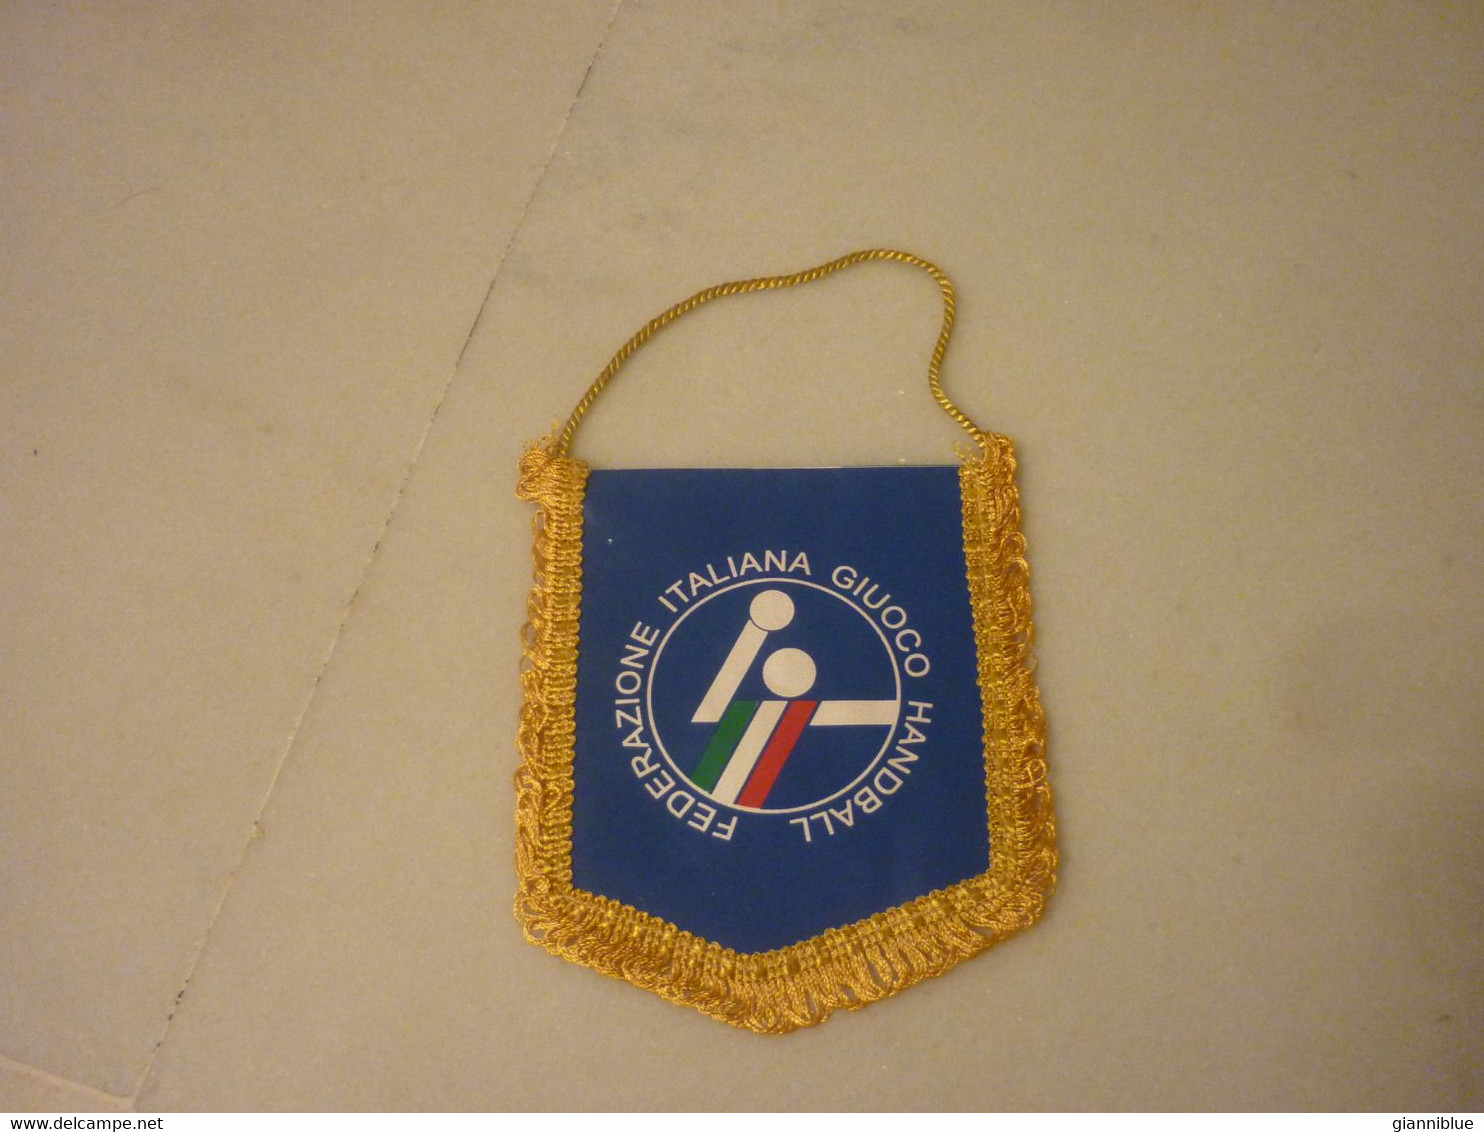 Italian Handball Italy Federation Pennant - Handball